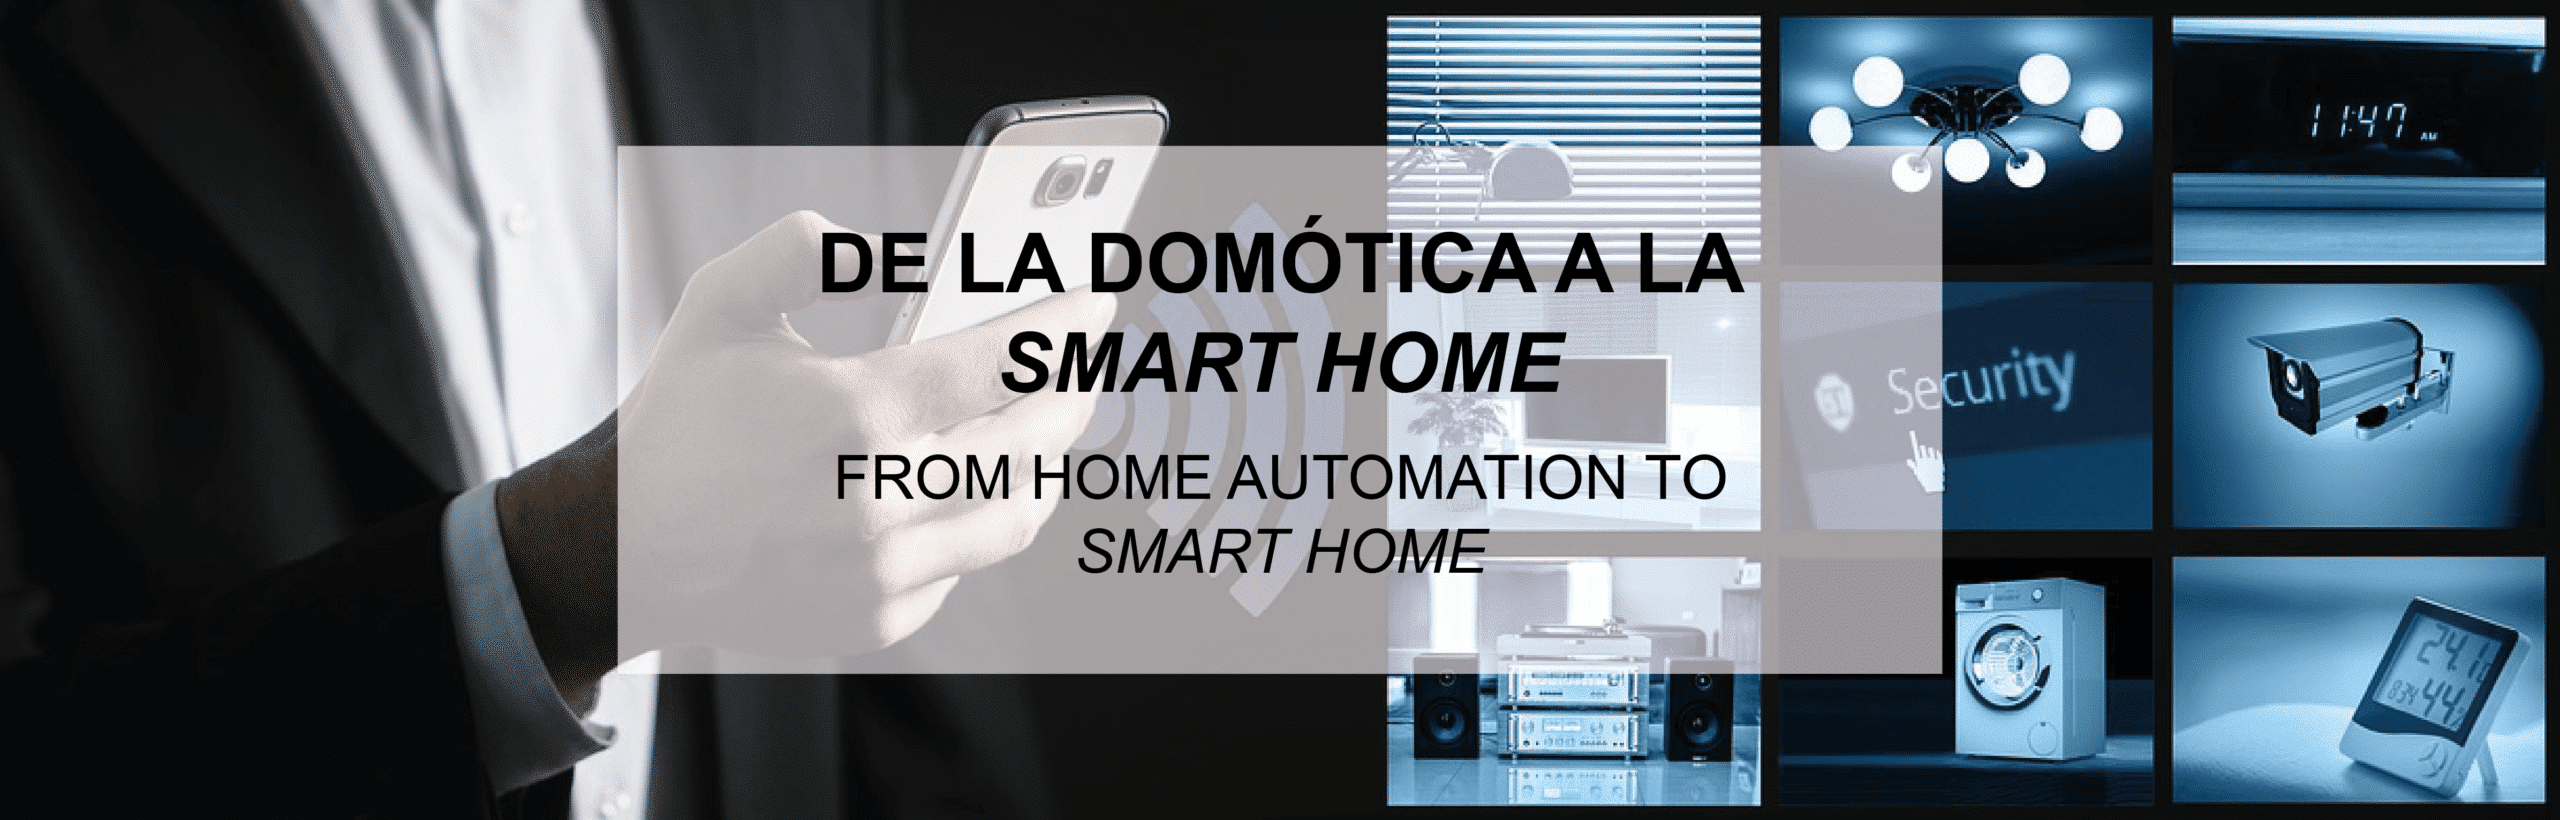 smart home: la casa inteligente